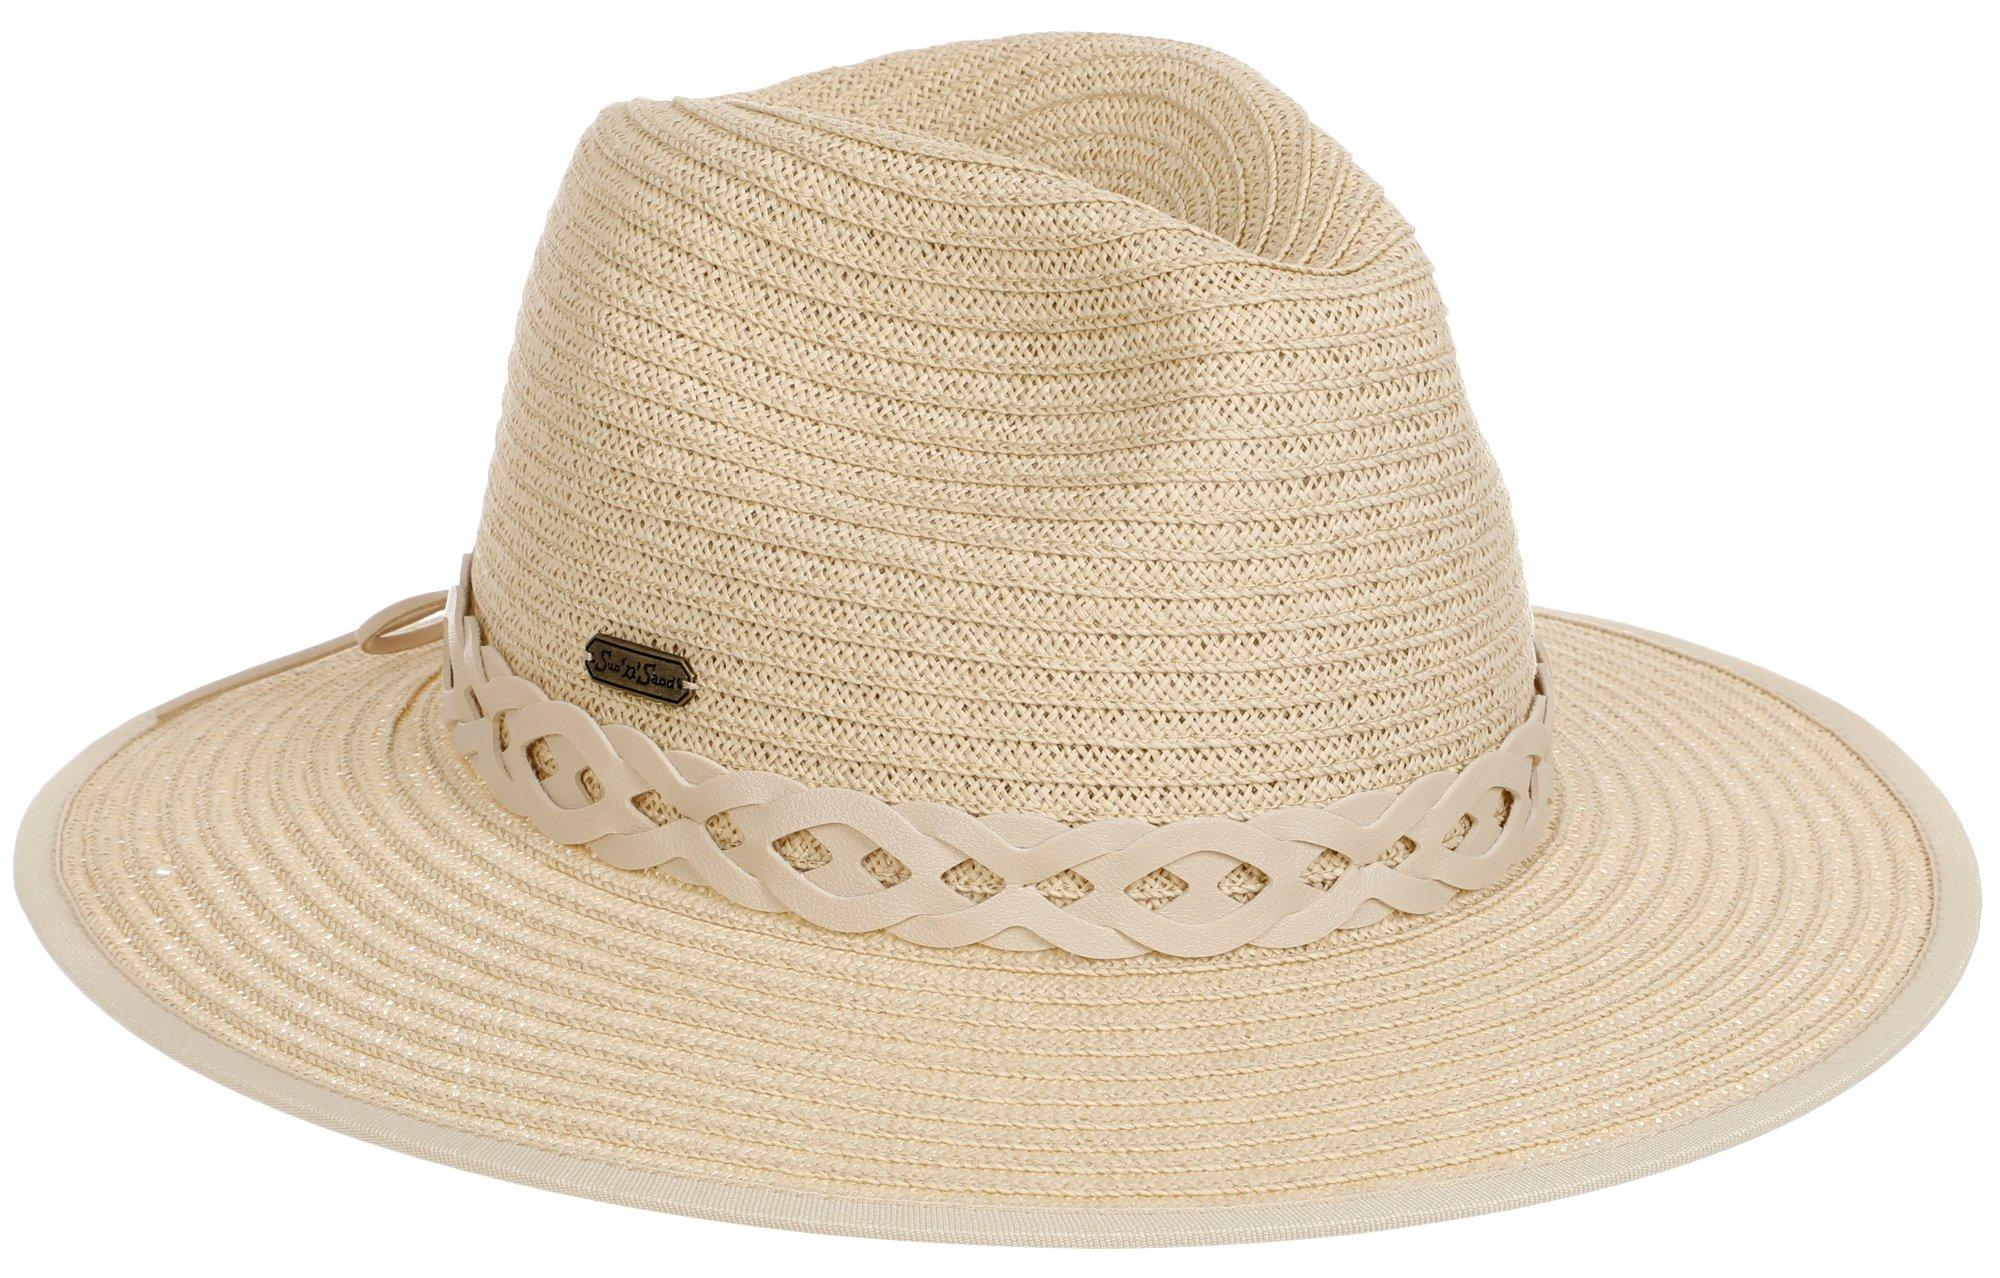 Women's Panama Sun Hat